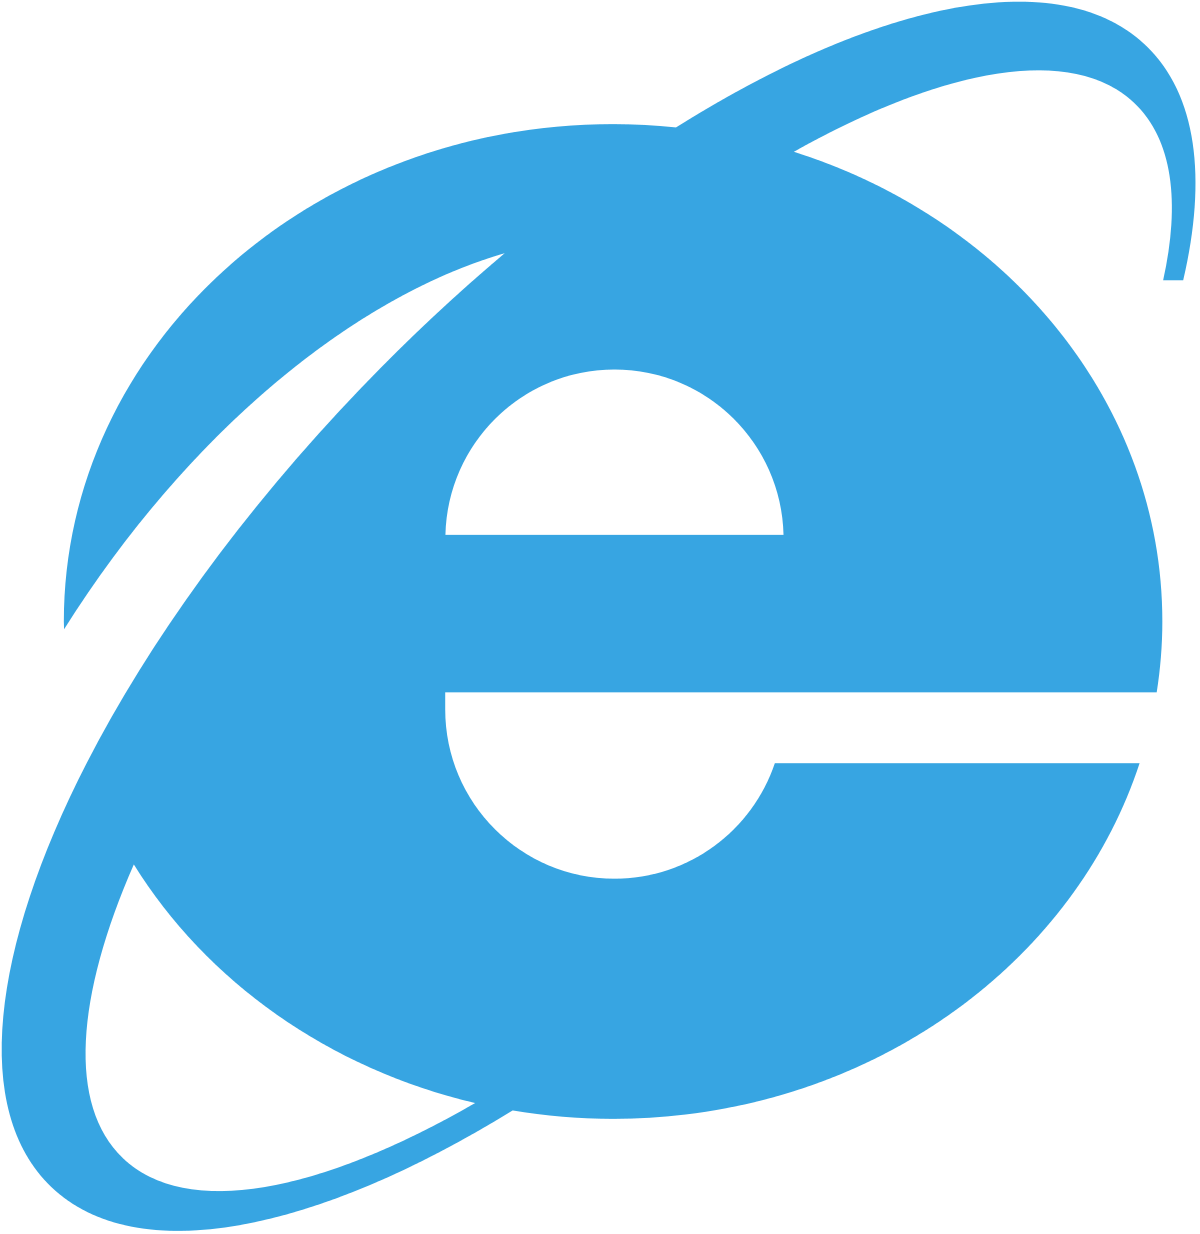 Windows Installer 3.1 or later
Internet Explorer 5.01 or later